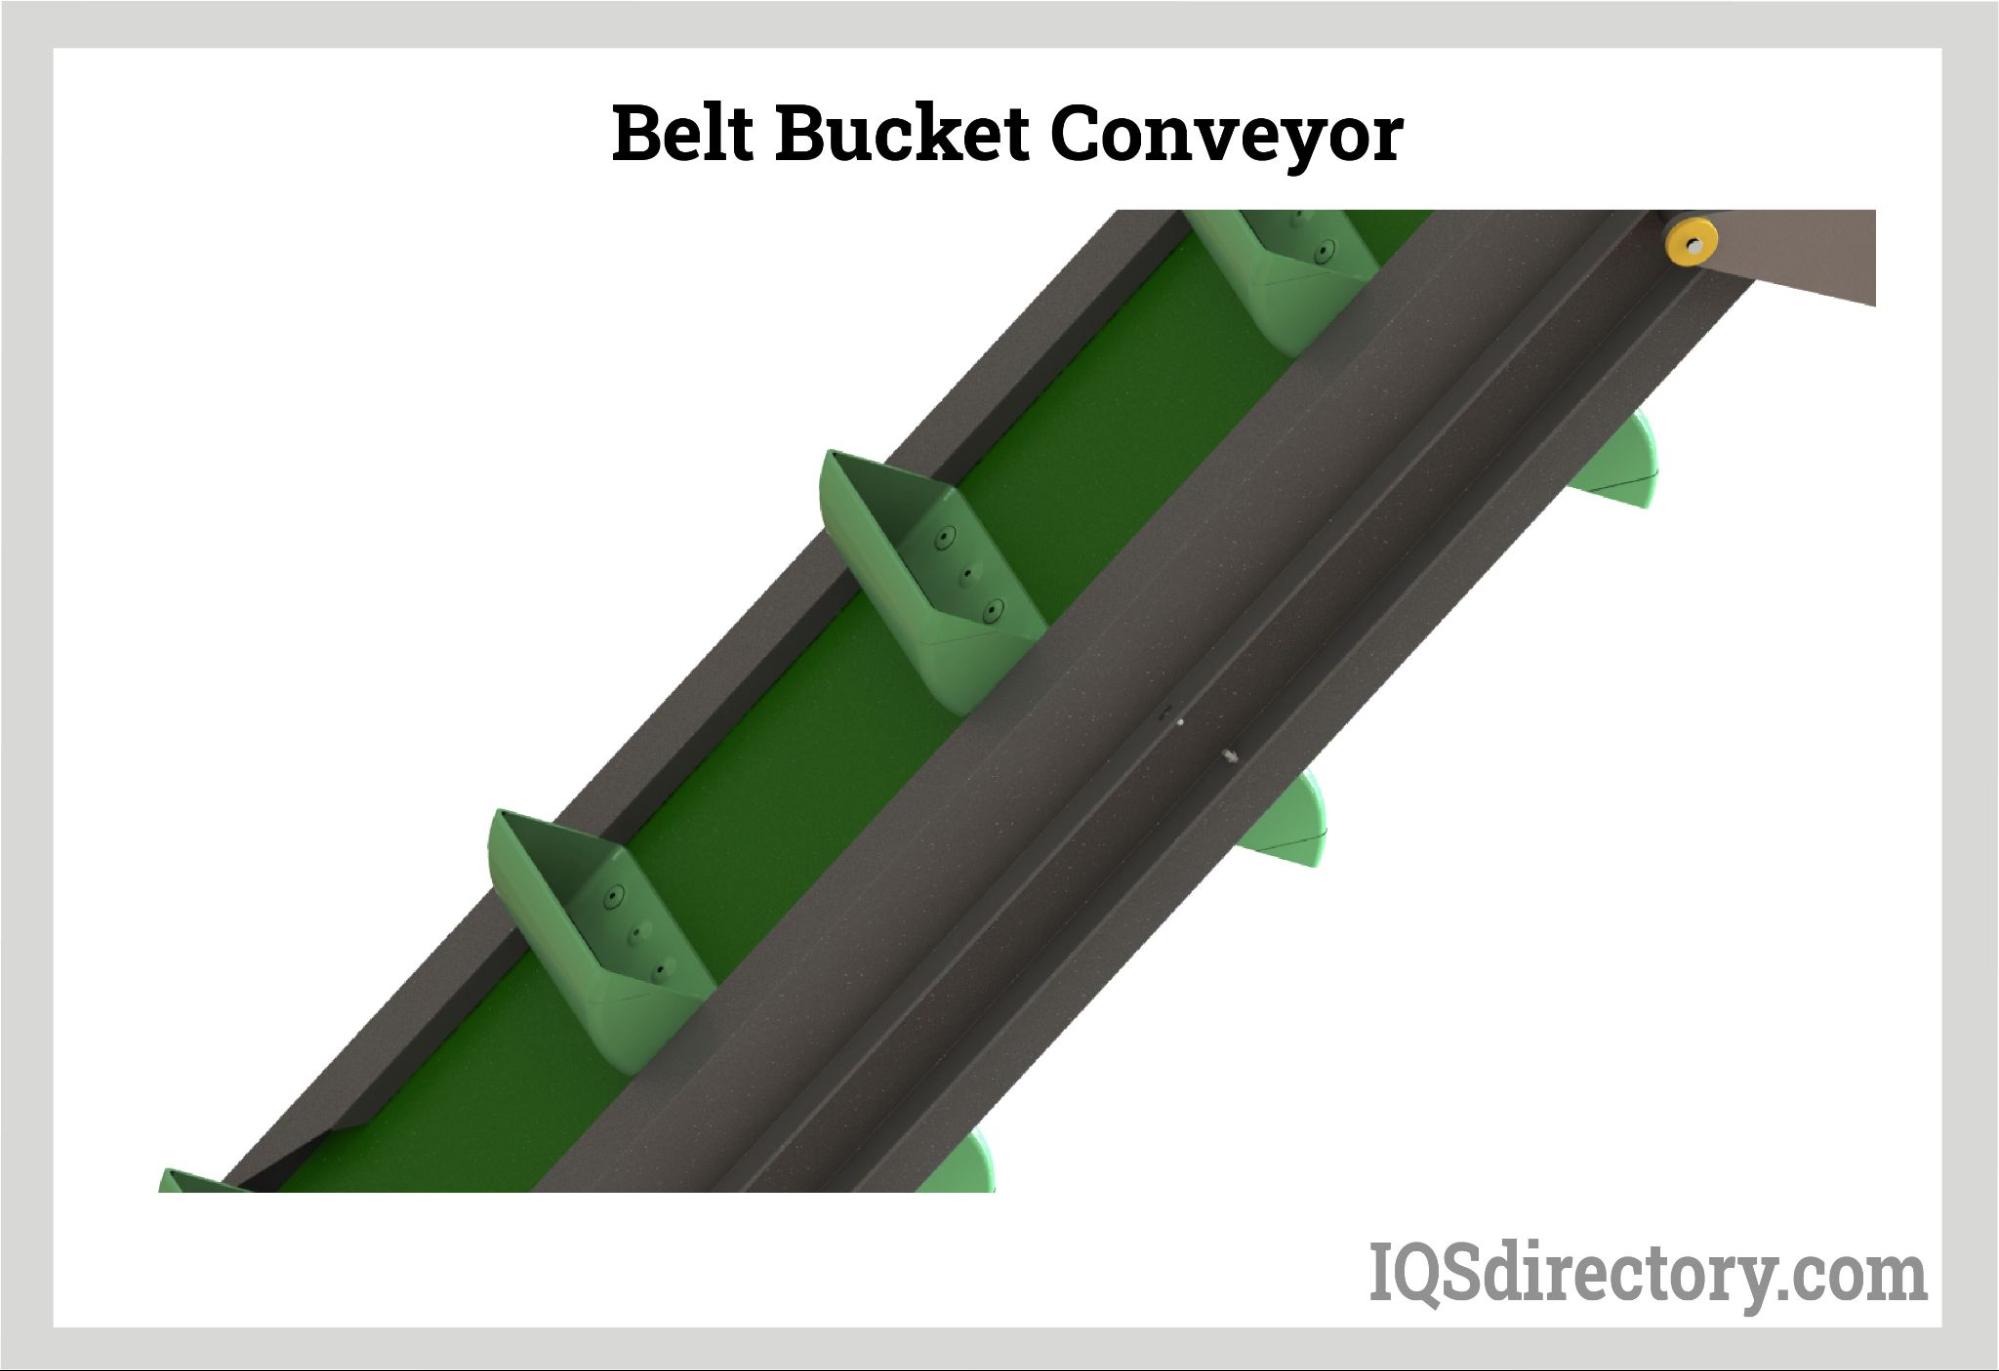 Belt Bucket Conveyor